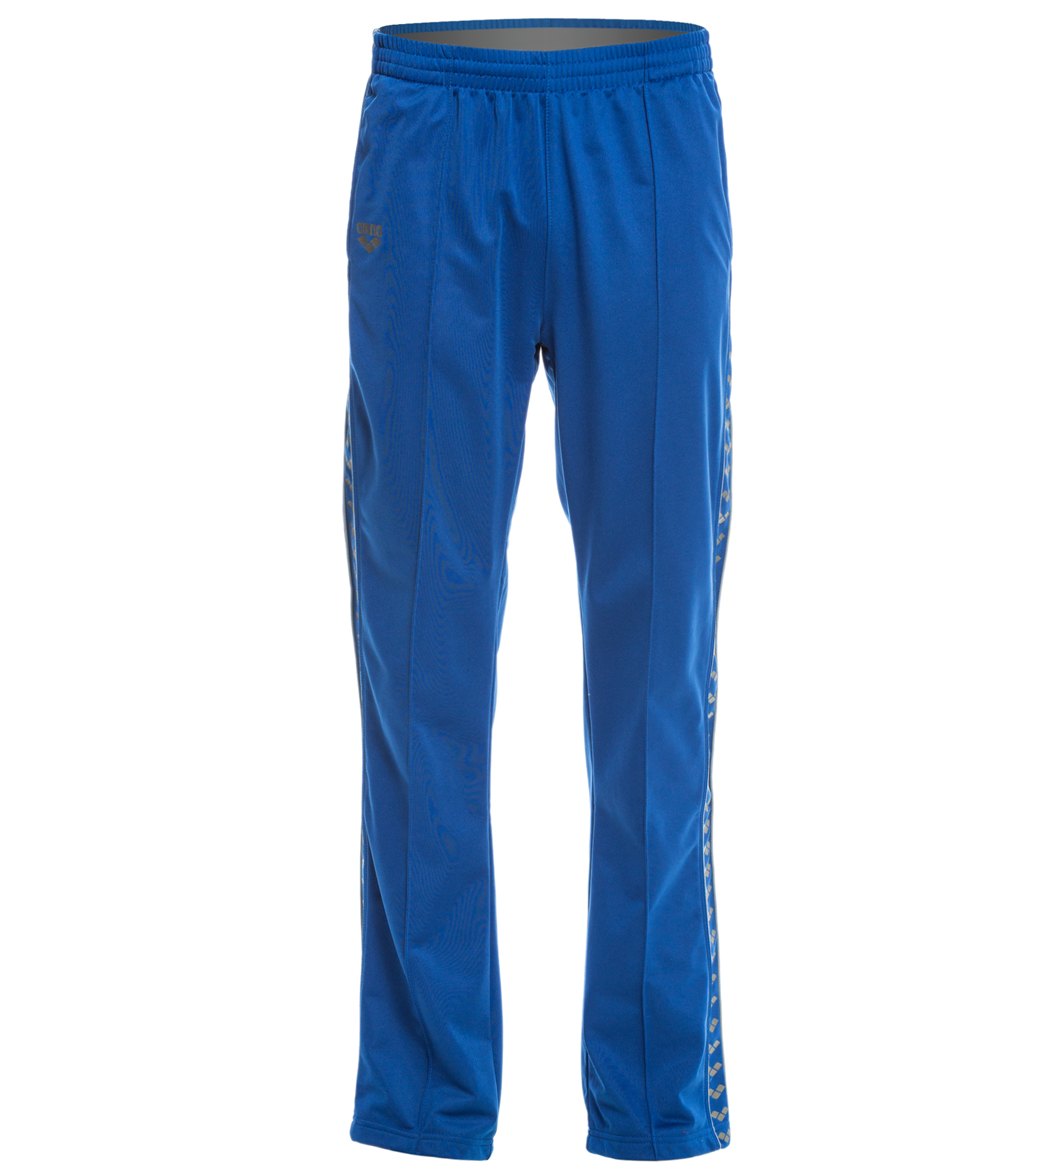 blue warm up pants